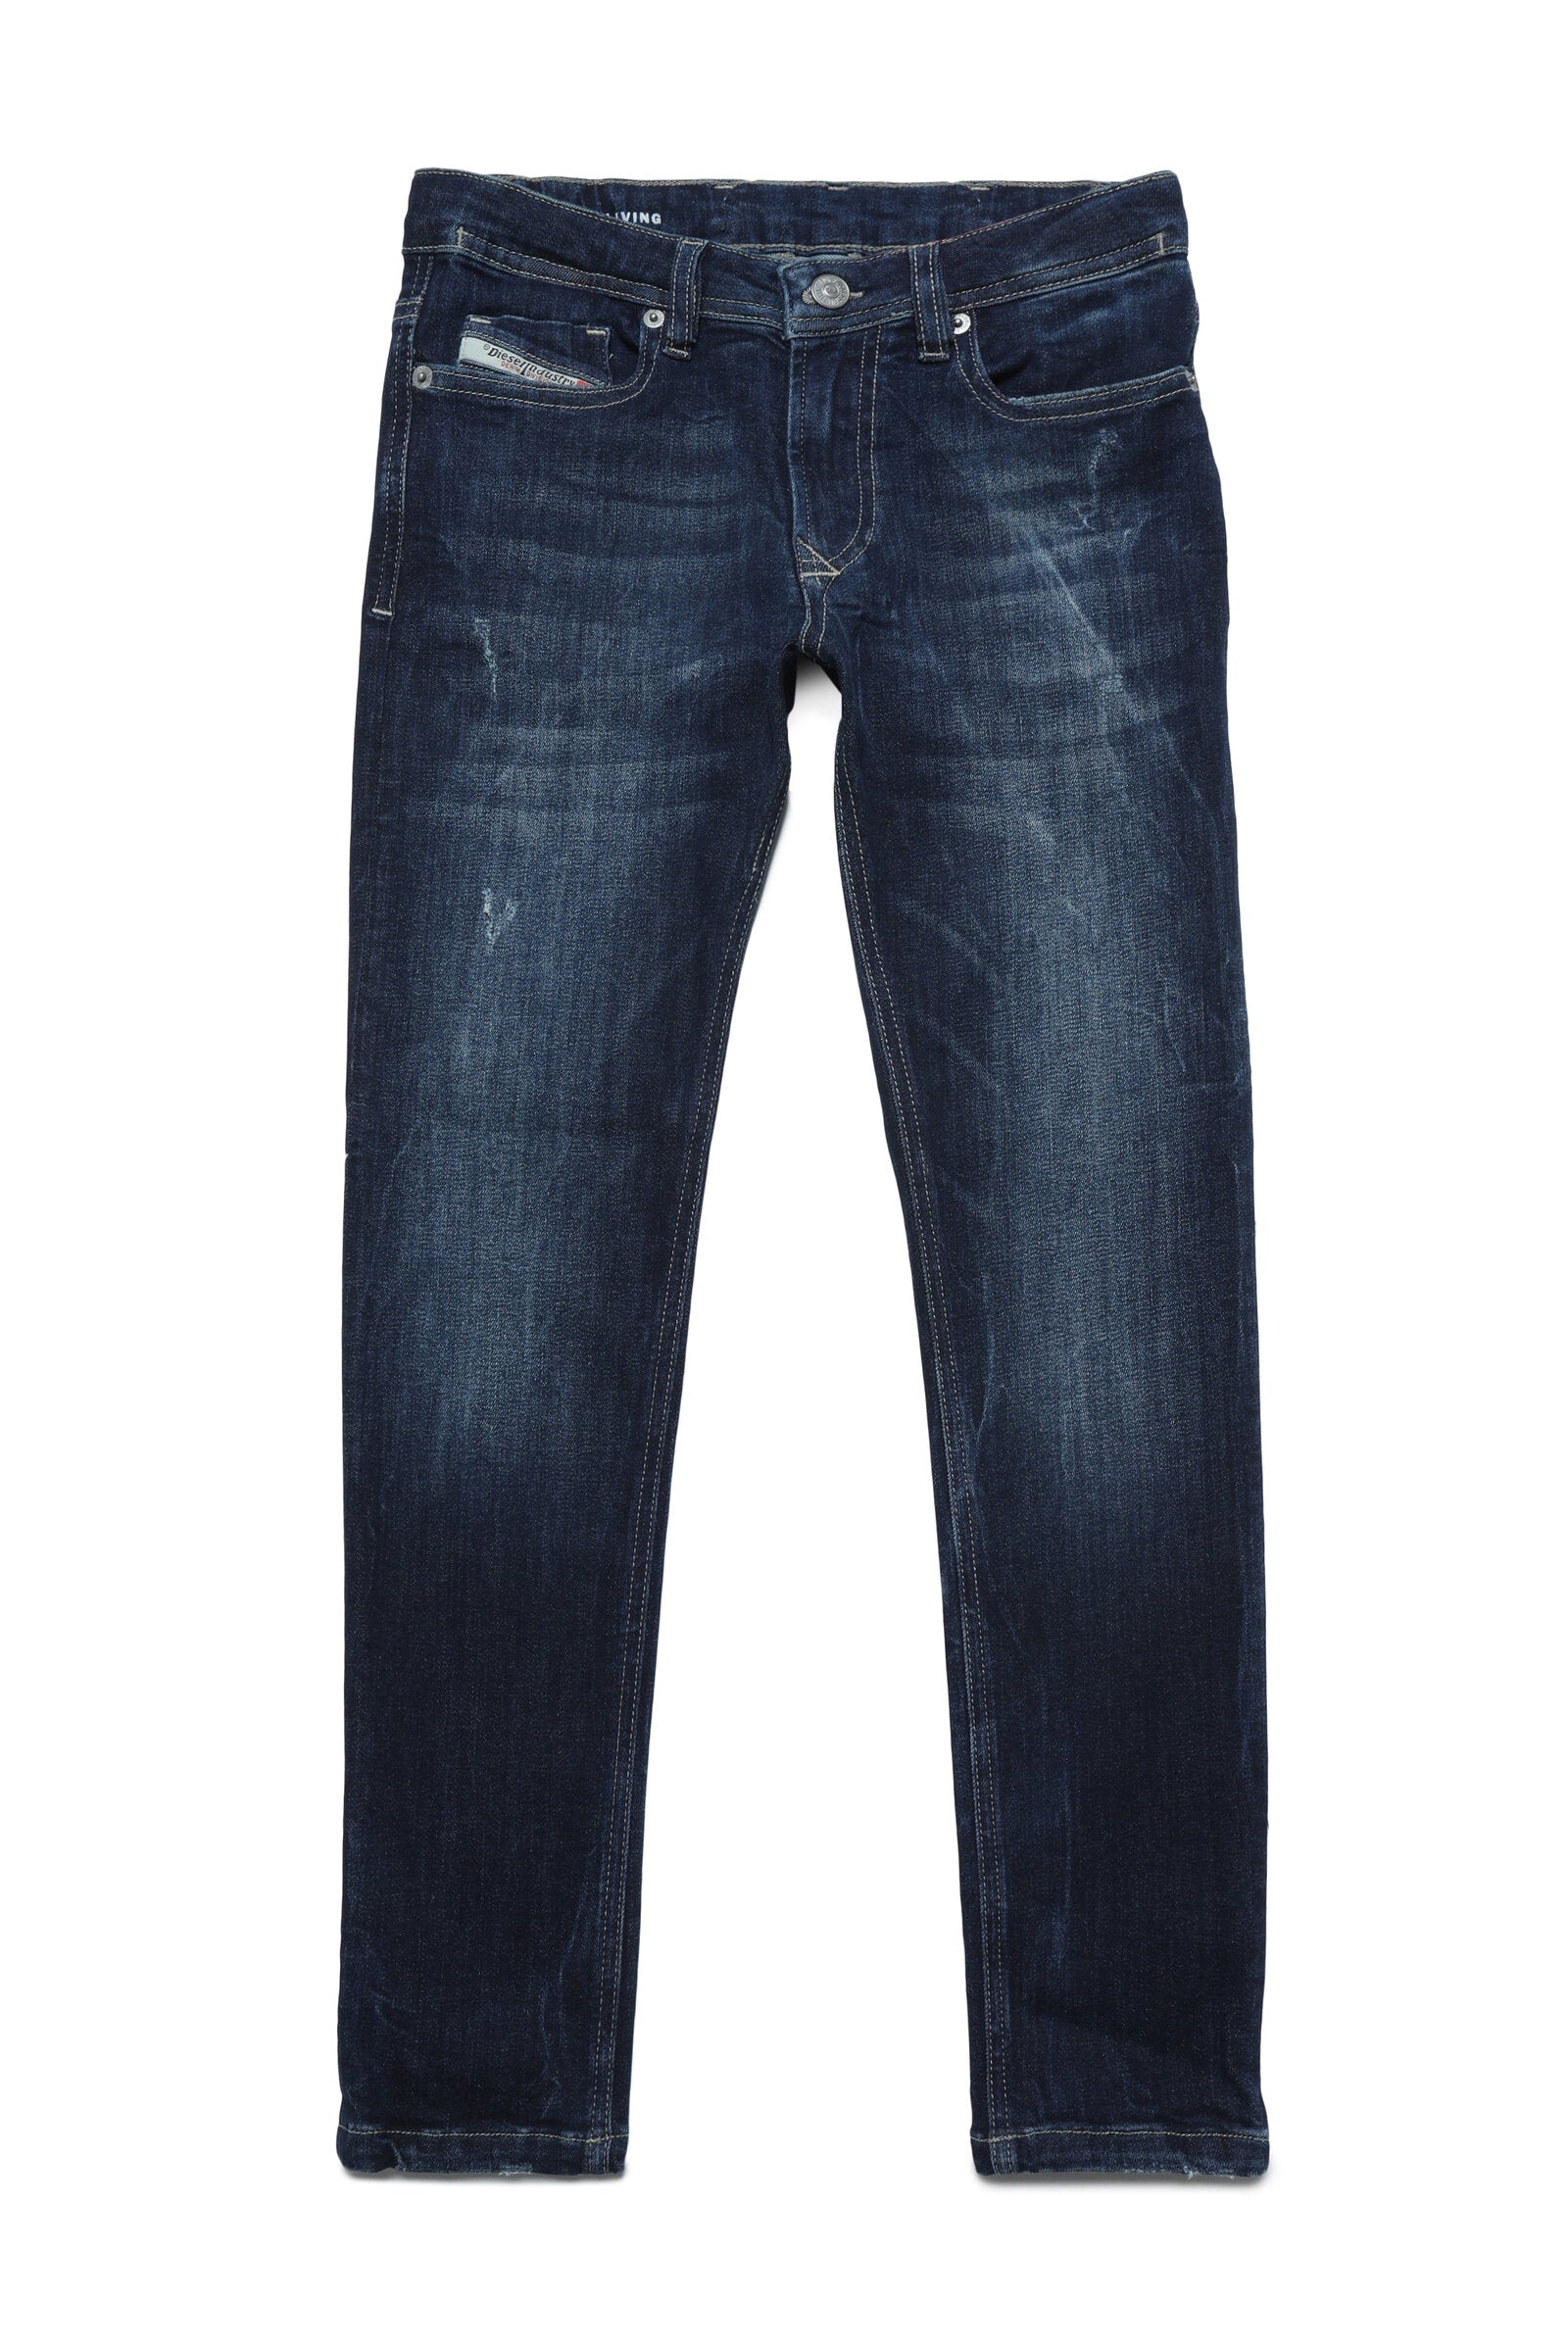 Jeans 1979 Sleenker skinny blu scuro sfumato con abrasioni